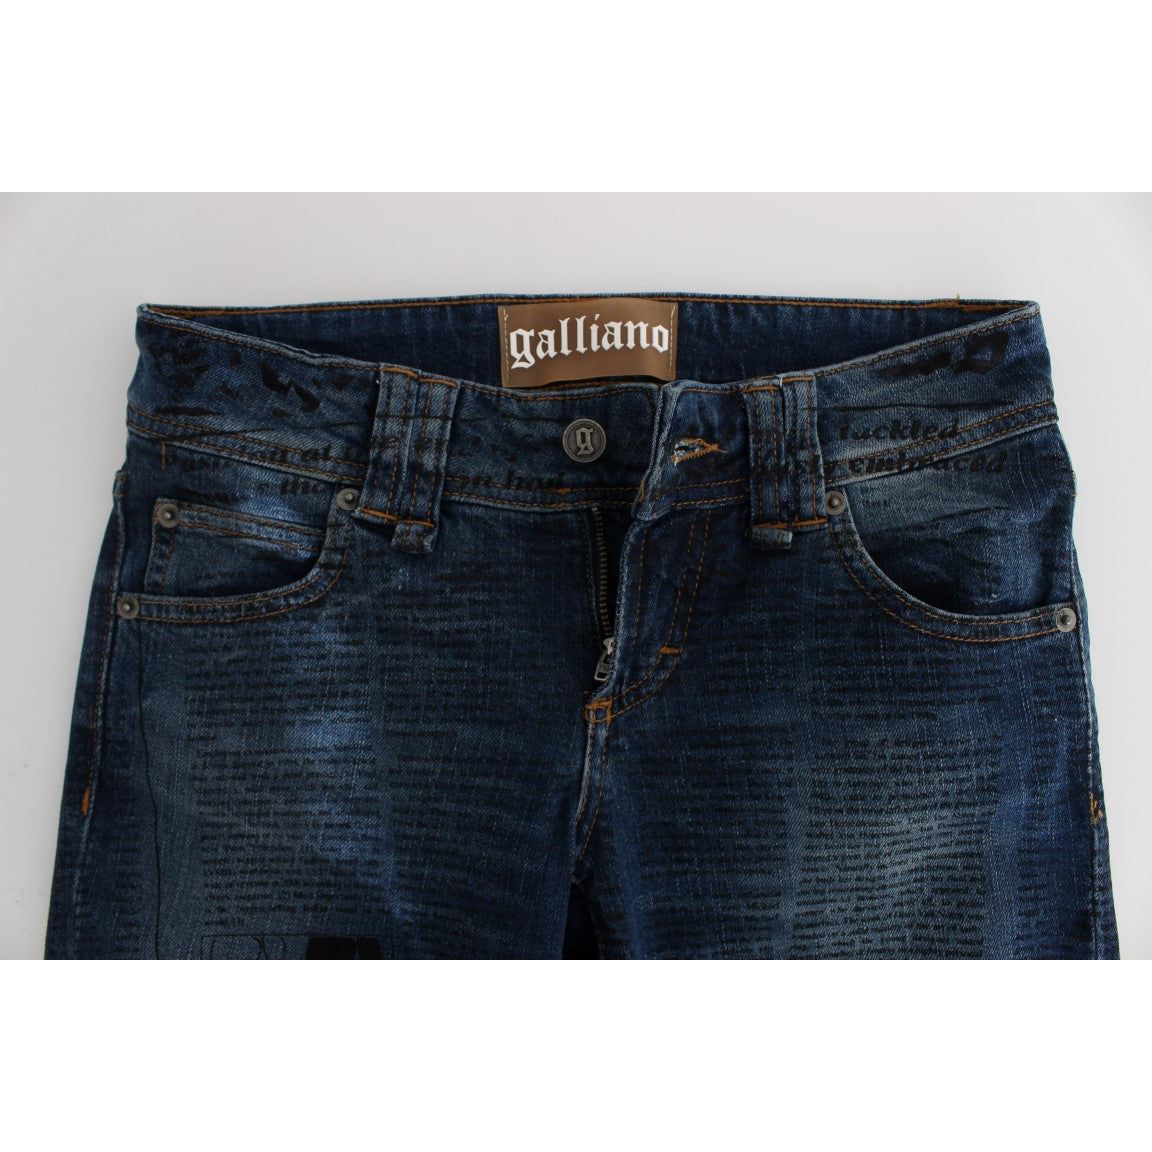 John Galliano Elegant Slim Bootcut Denim Jeans blue-wash-cotton-blend-slim-fit-bootcut-jeans-1 329940-blue-wash-cotton-blend-slim-fit-bootcut-jeans-3-3.jpg